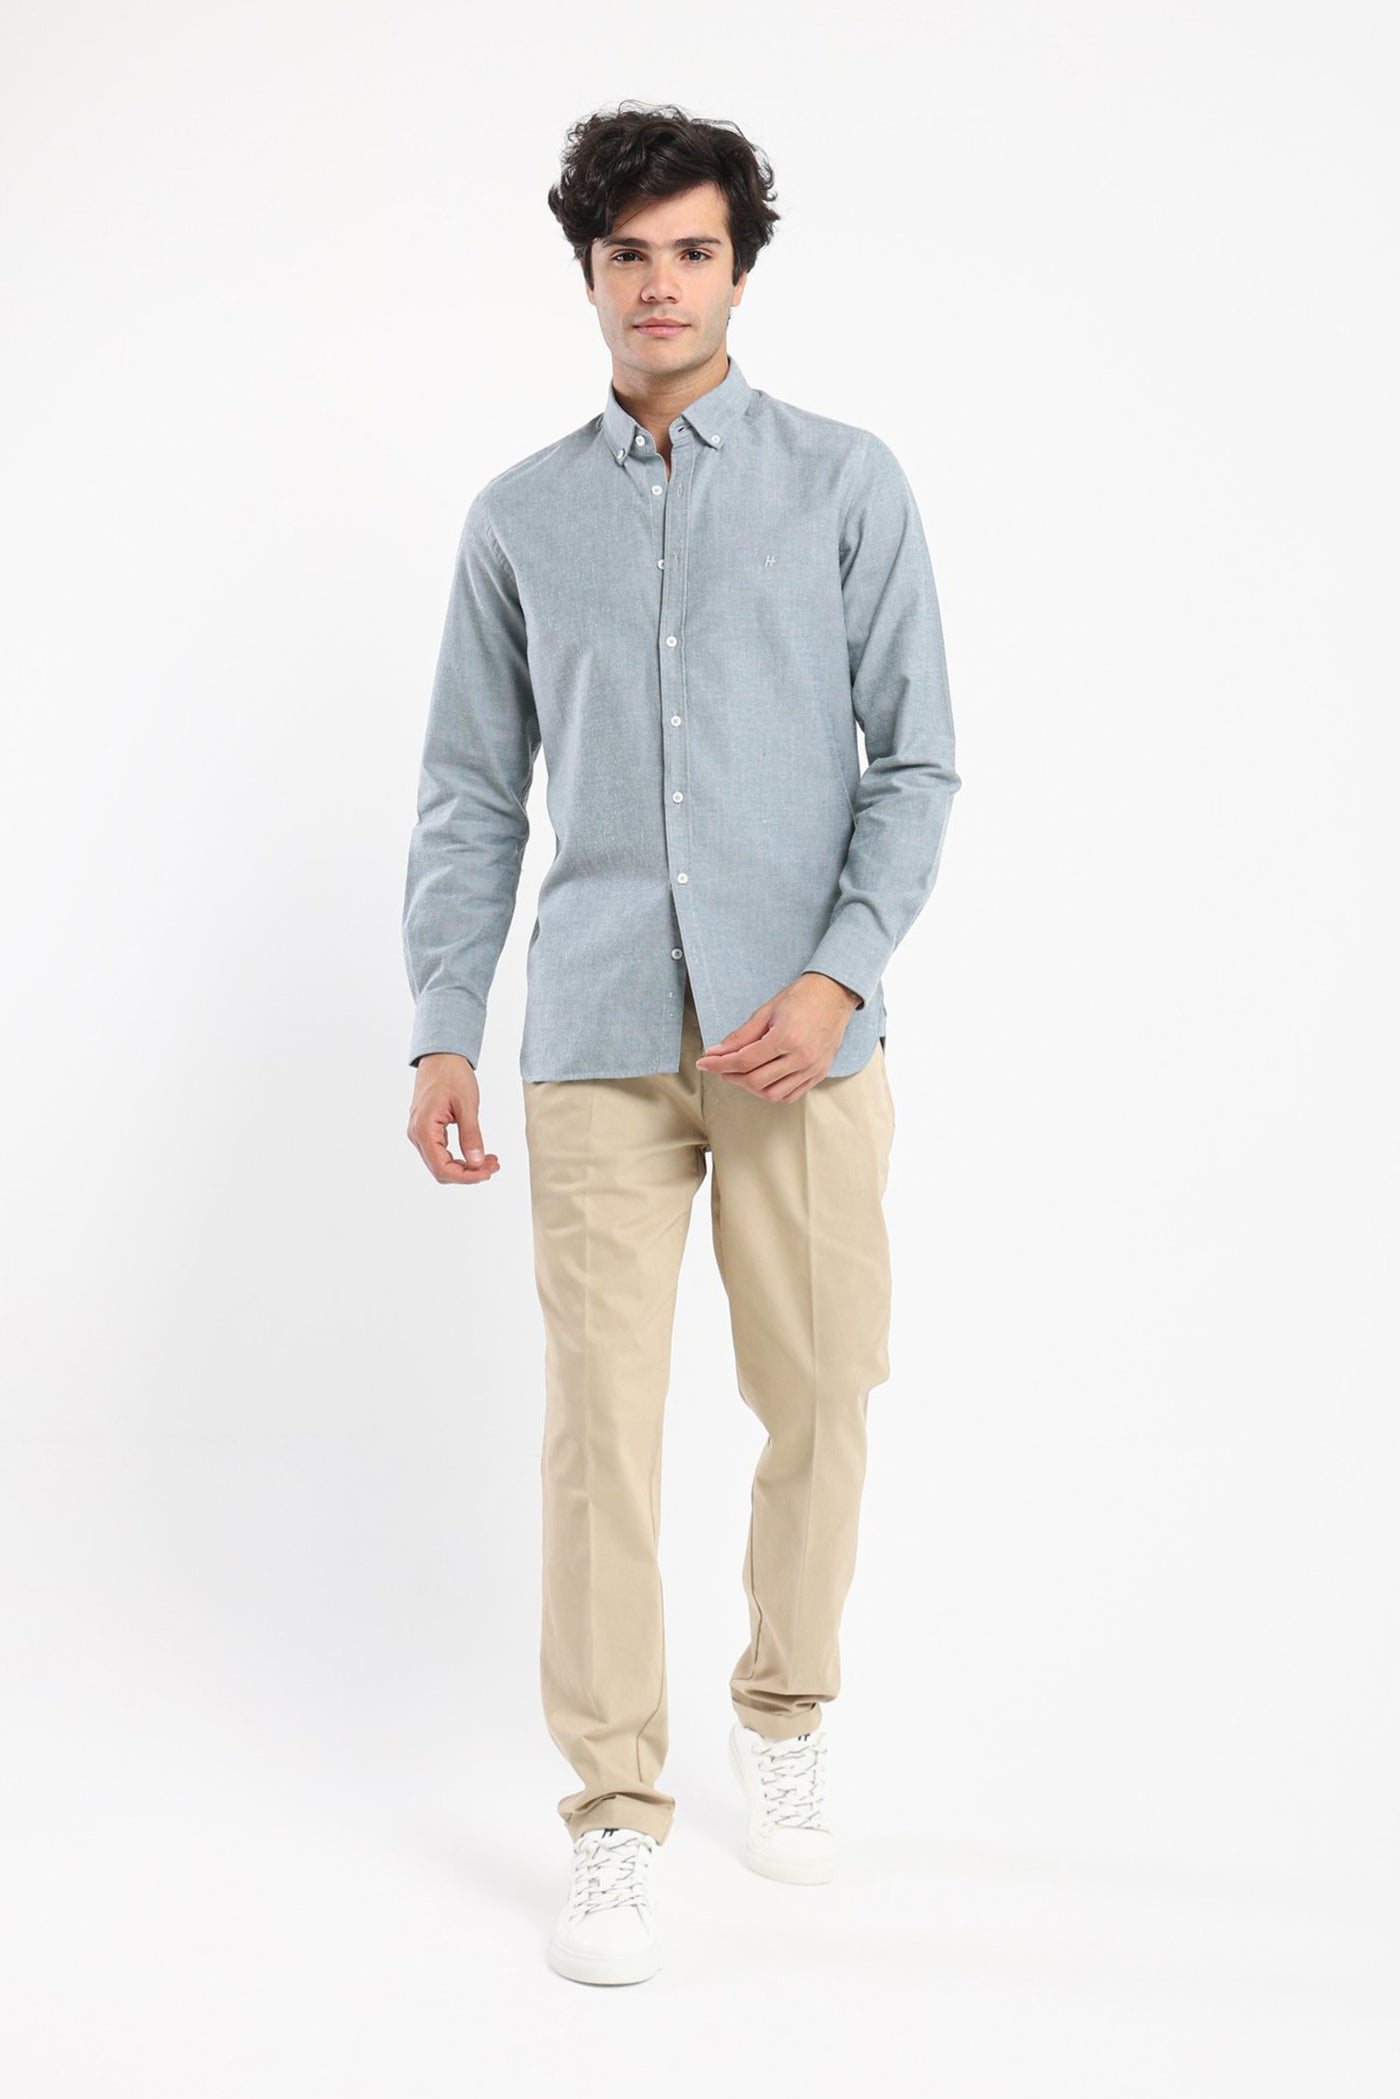 American Oxford Shirt - Long Sleeves